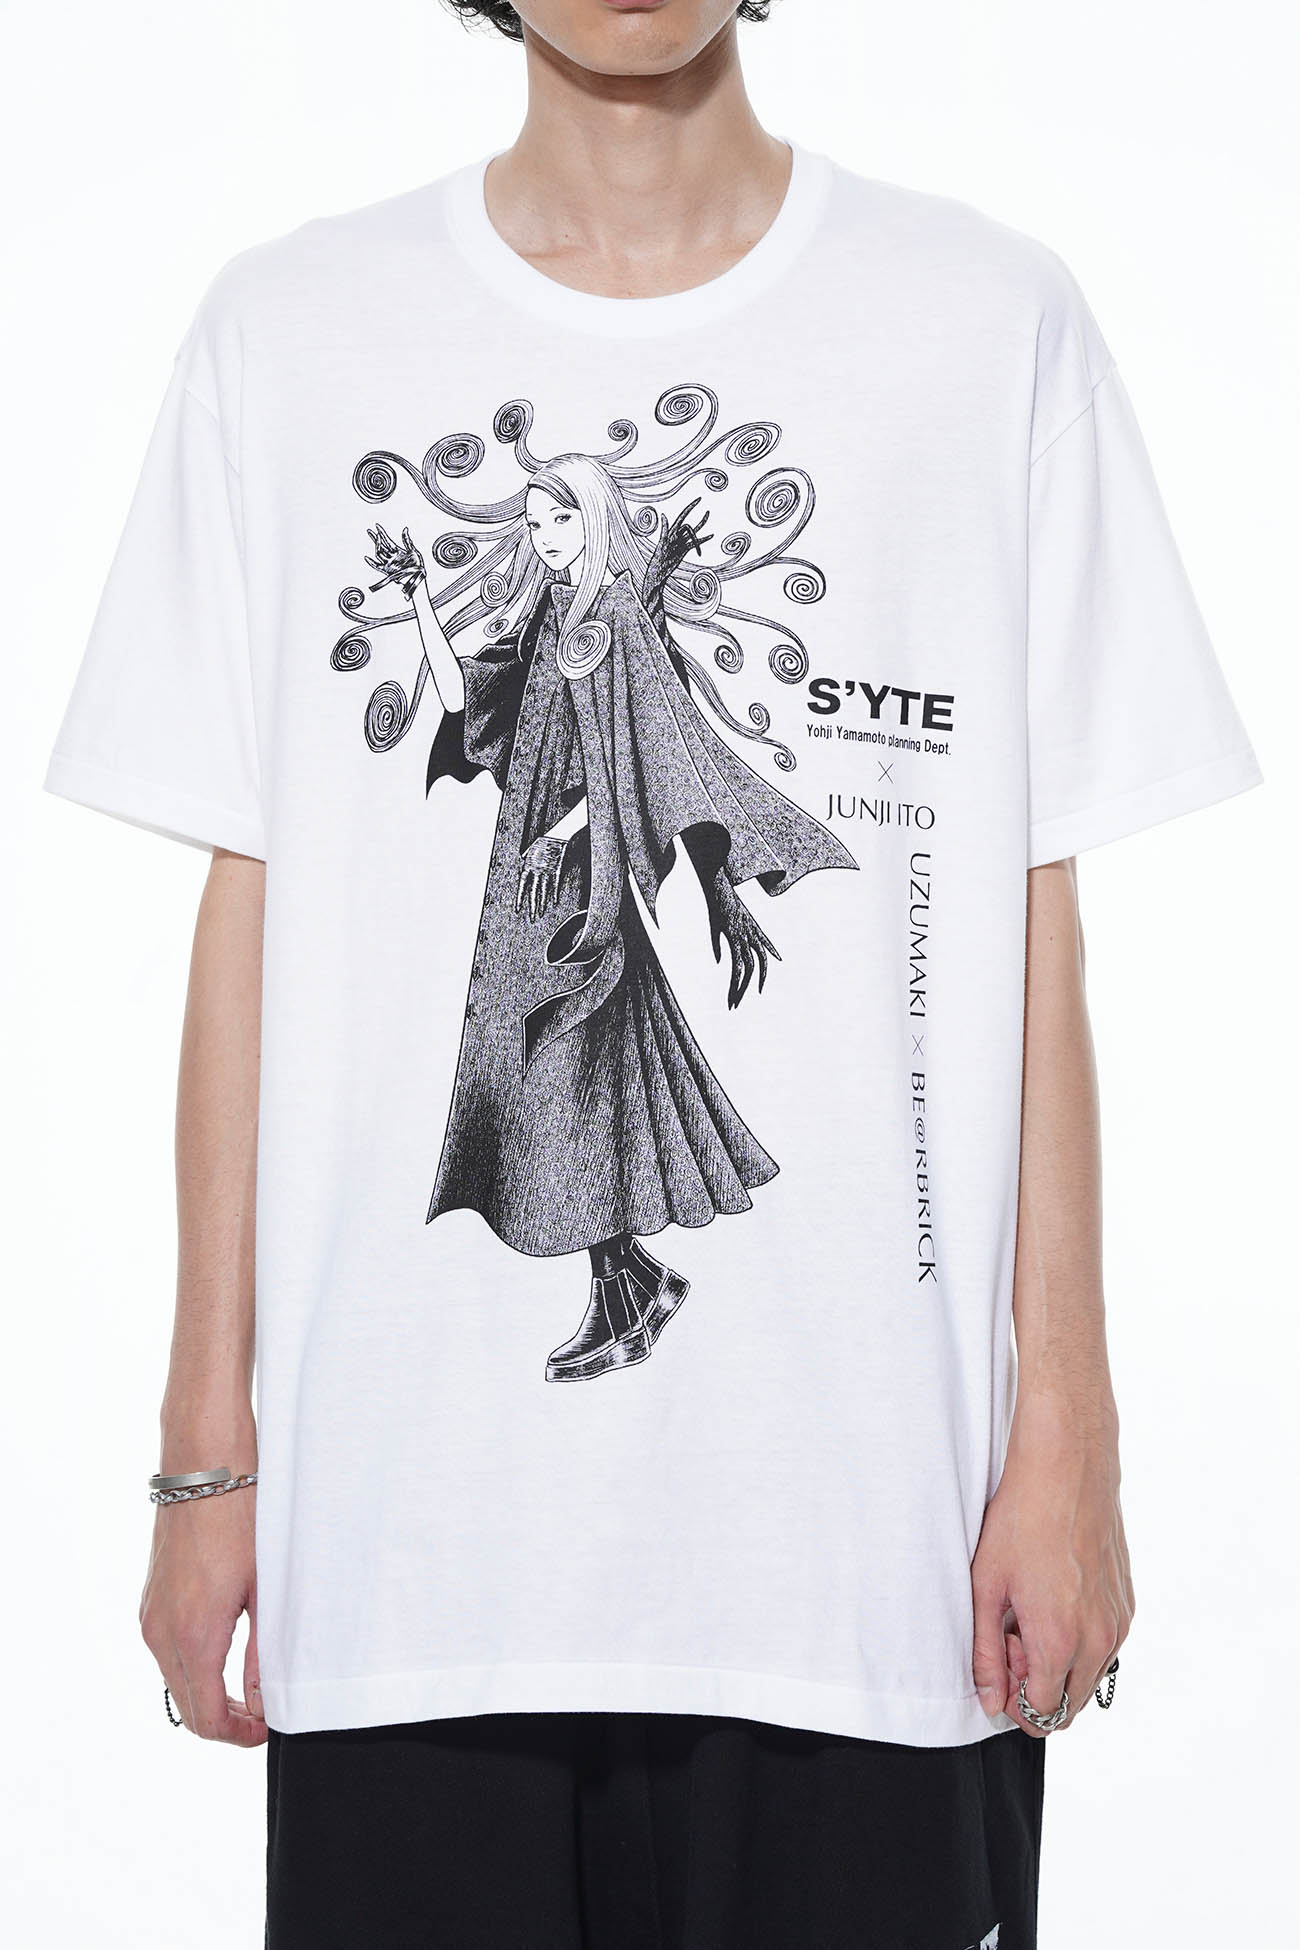 BE@RBRICK × Junji ITO"Kirie" Uzumaki Wearing Yohji Yamamoto T-shirt